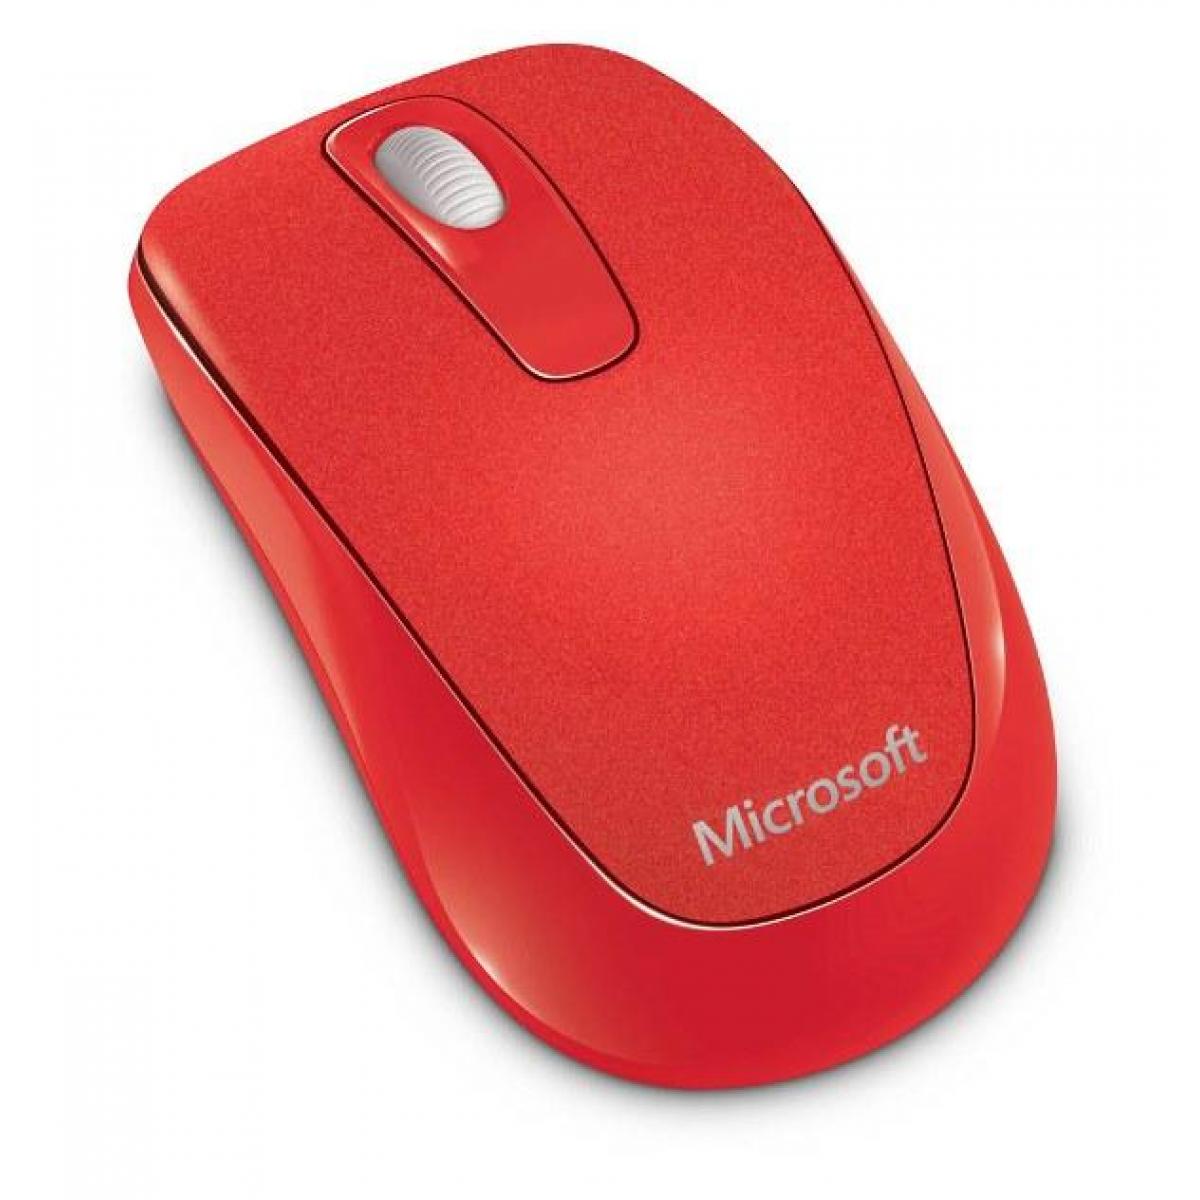 Microsoft Wireless Mobile Mouse 1000 | 2CF-00040 | City ...